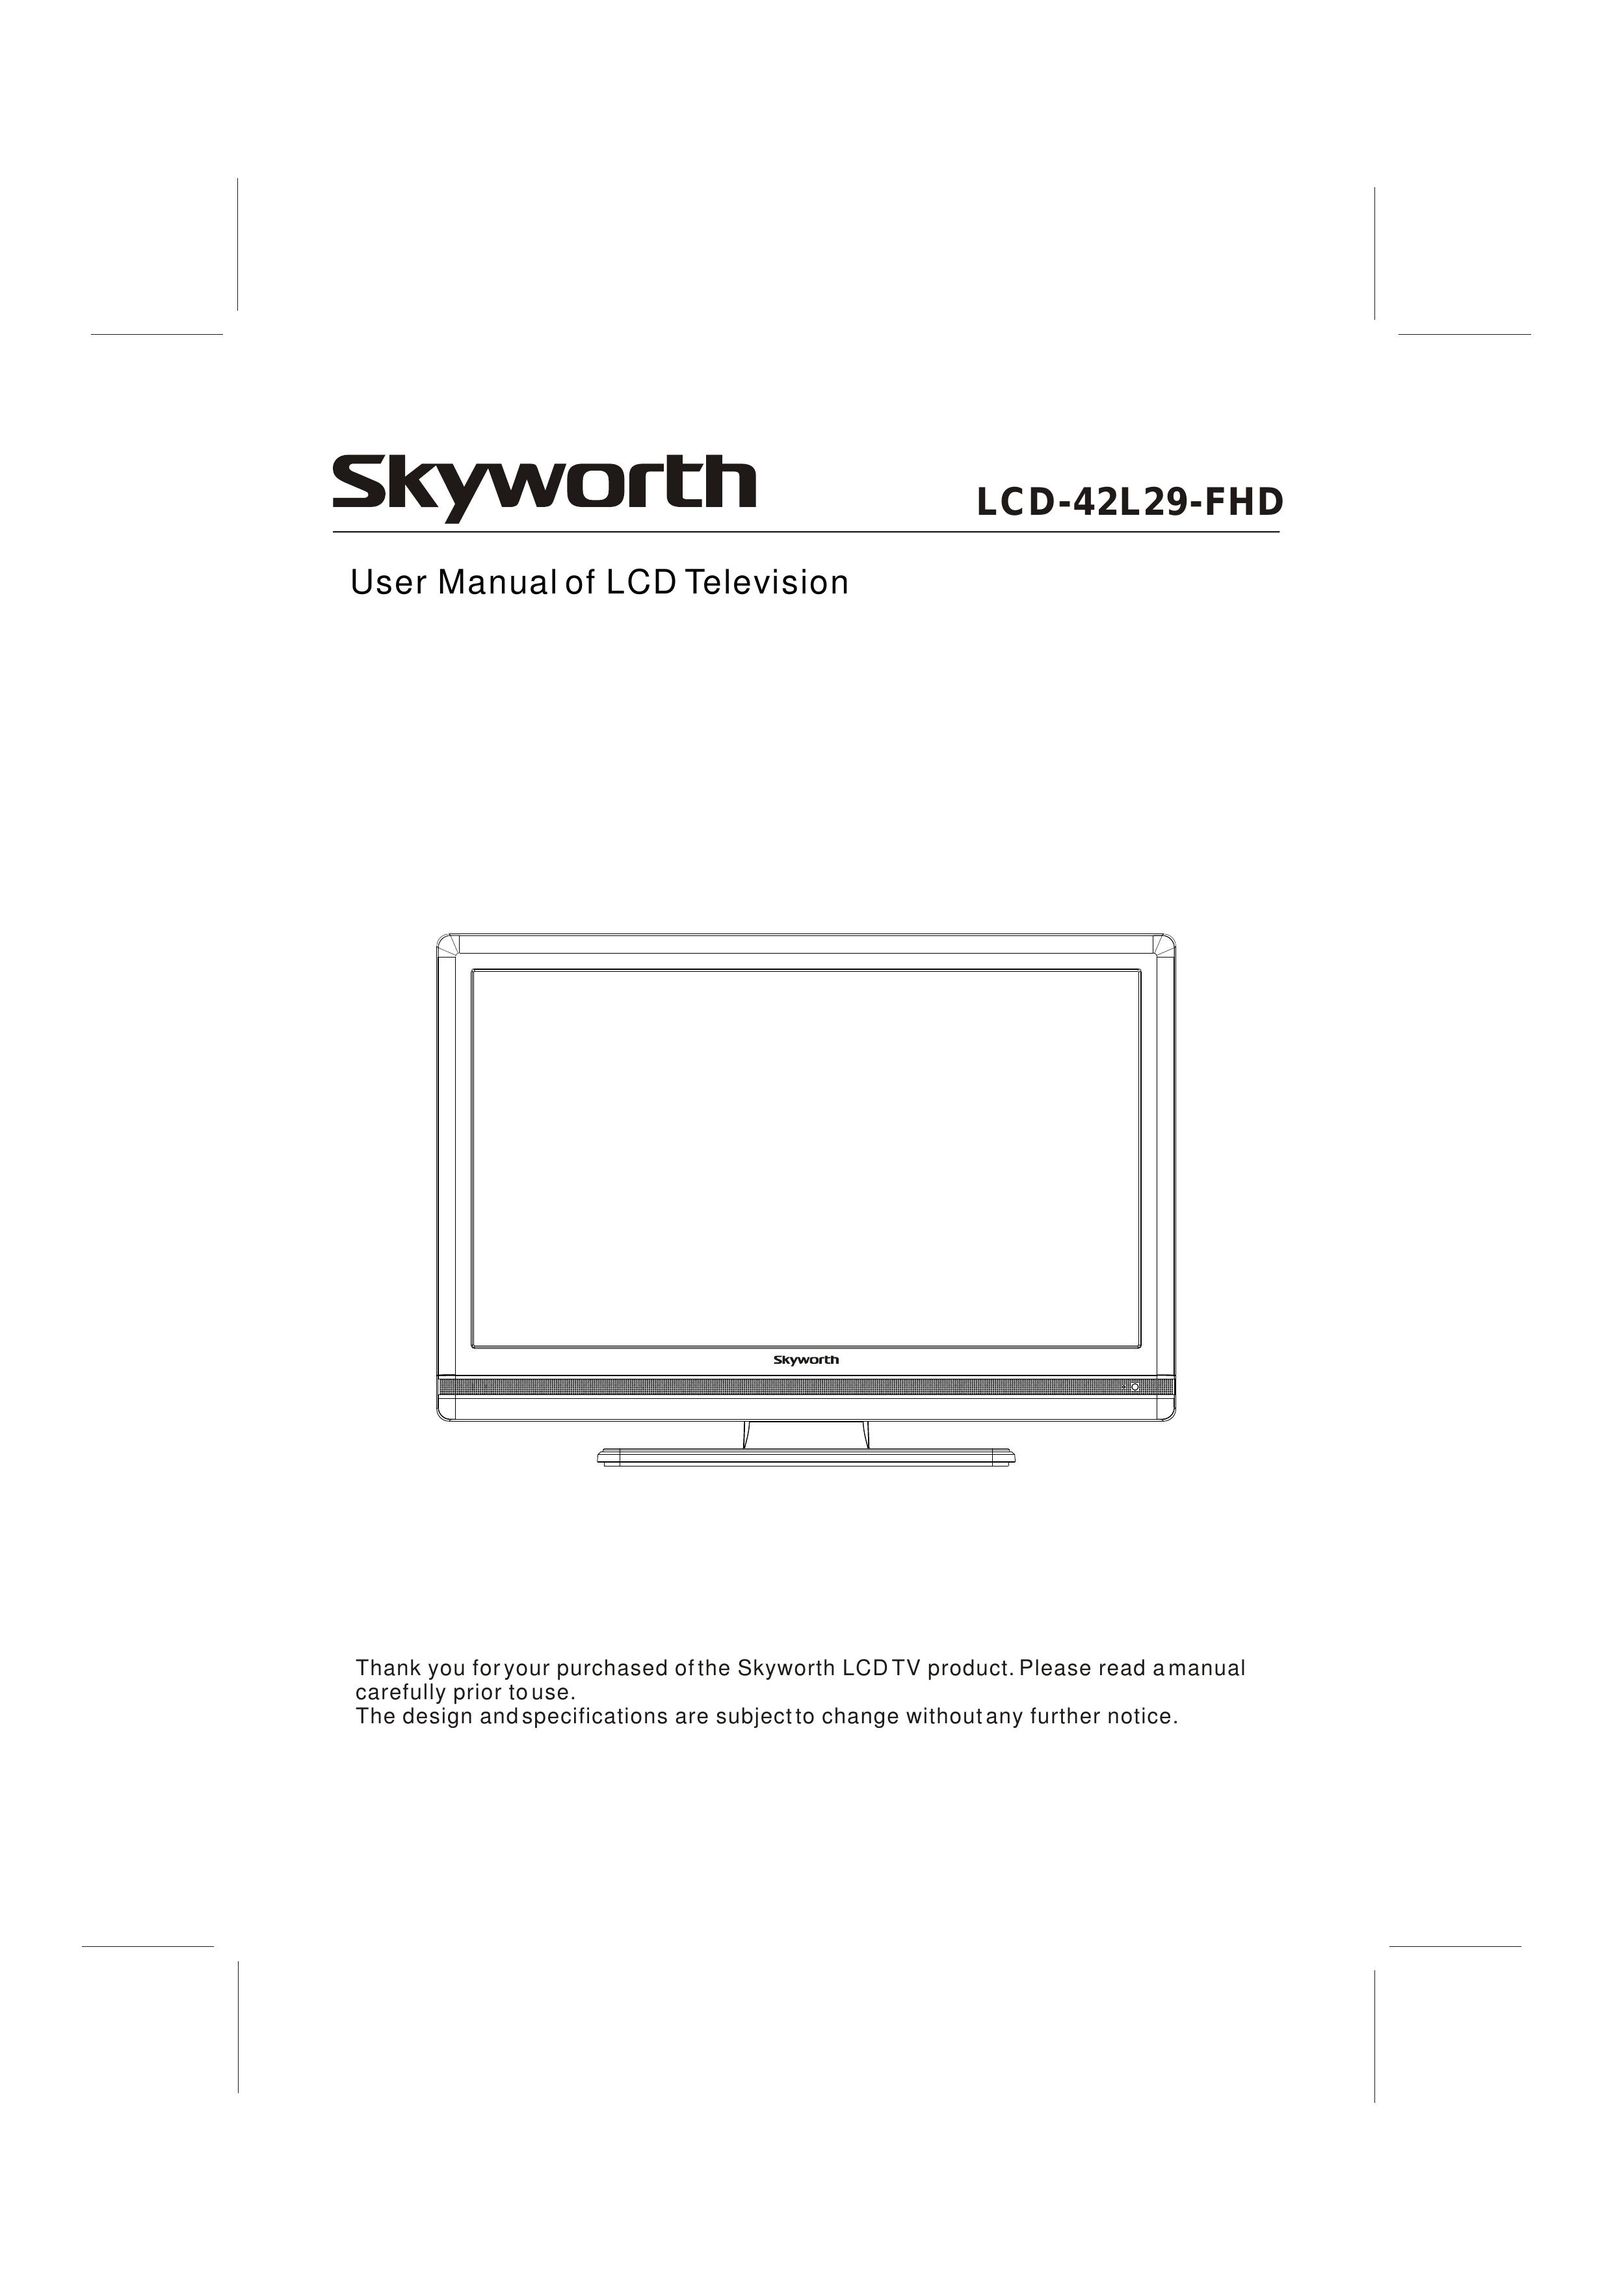 Skyworth LCD-42L29-FHD Flat Panel Television User Manual